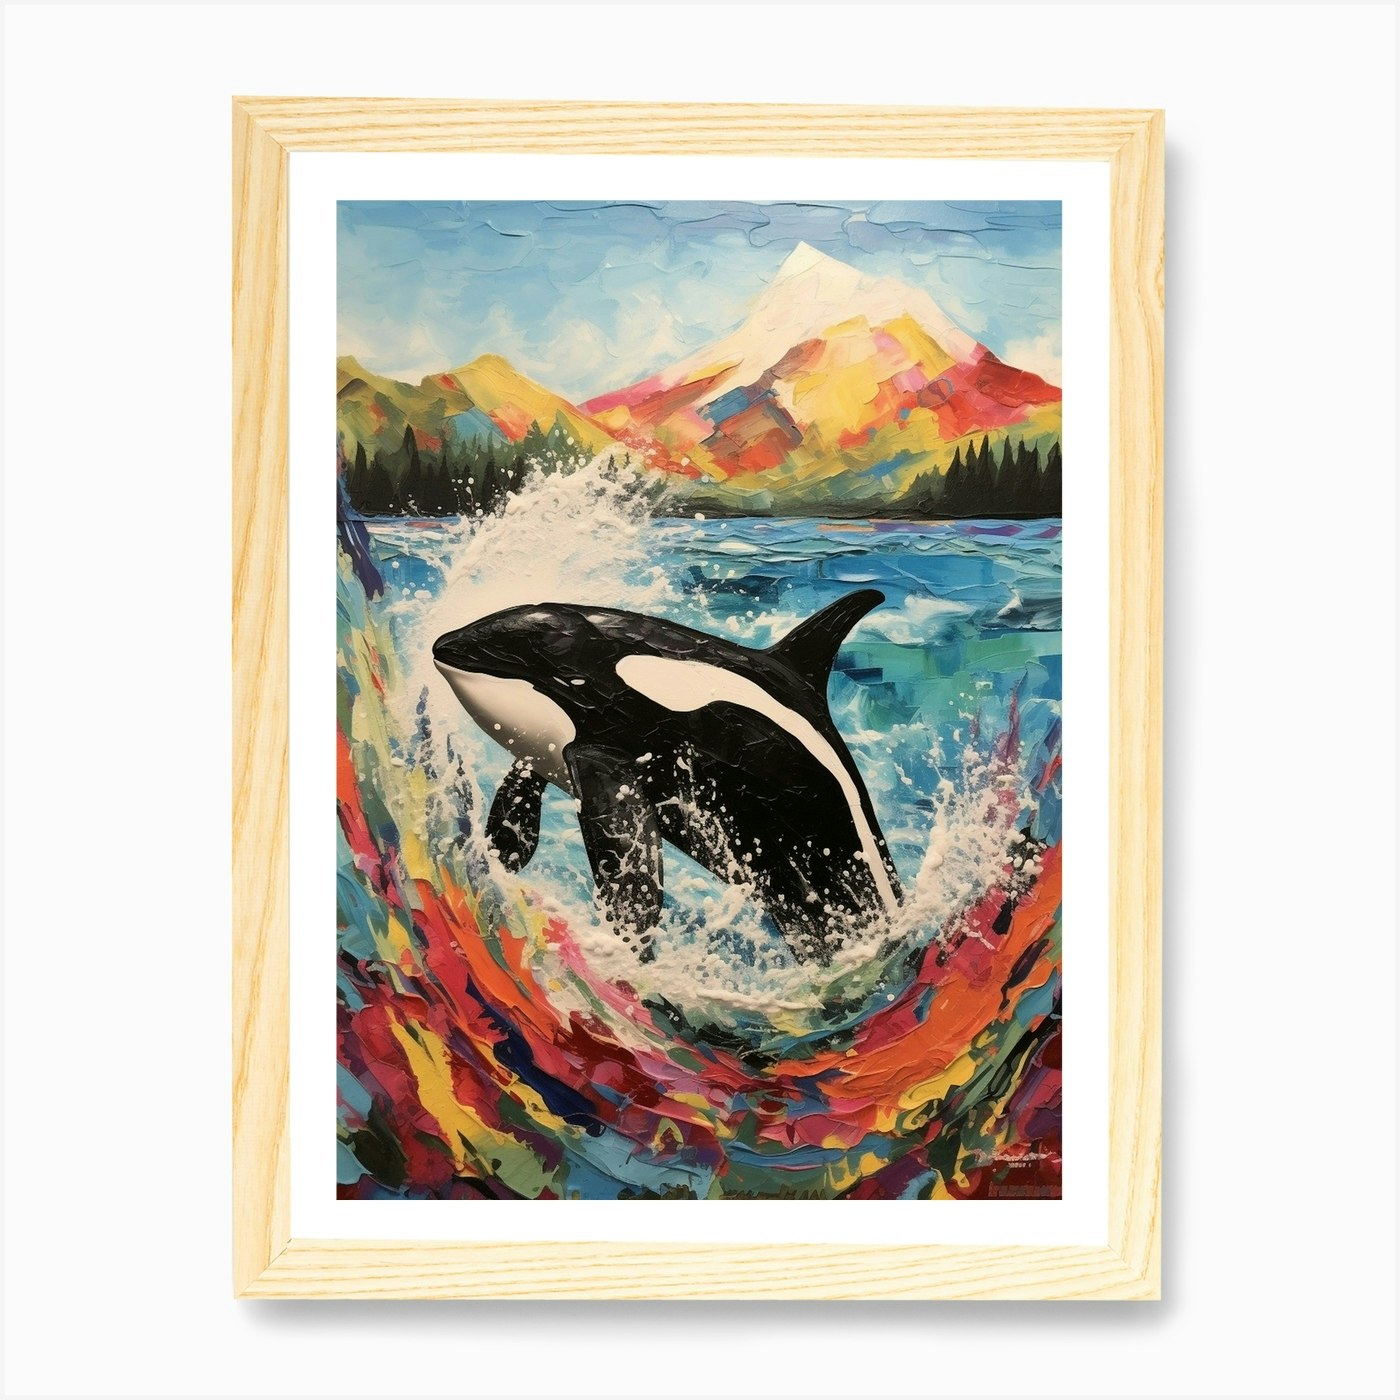 Orca whale in martini glass watercolor - Orca Whale In Martini Glass  Watercolor - Posters and Art Prints